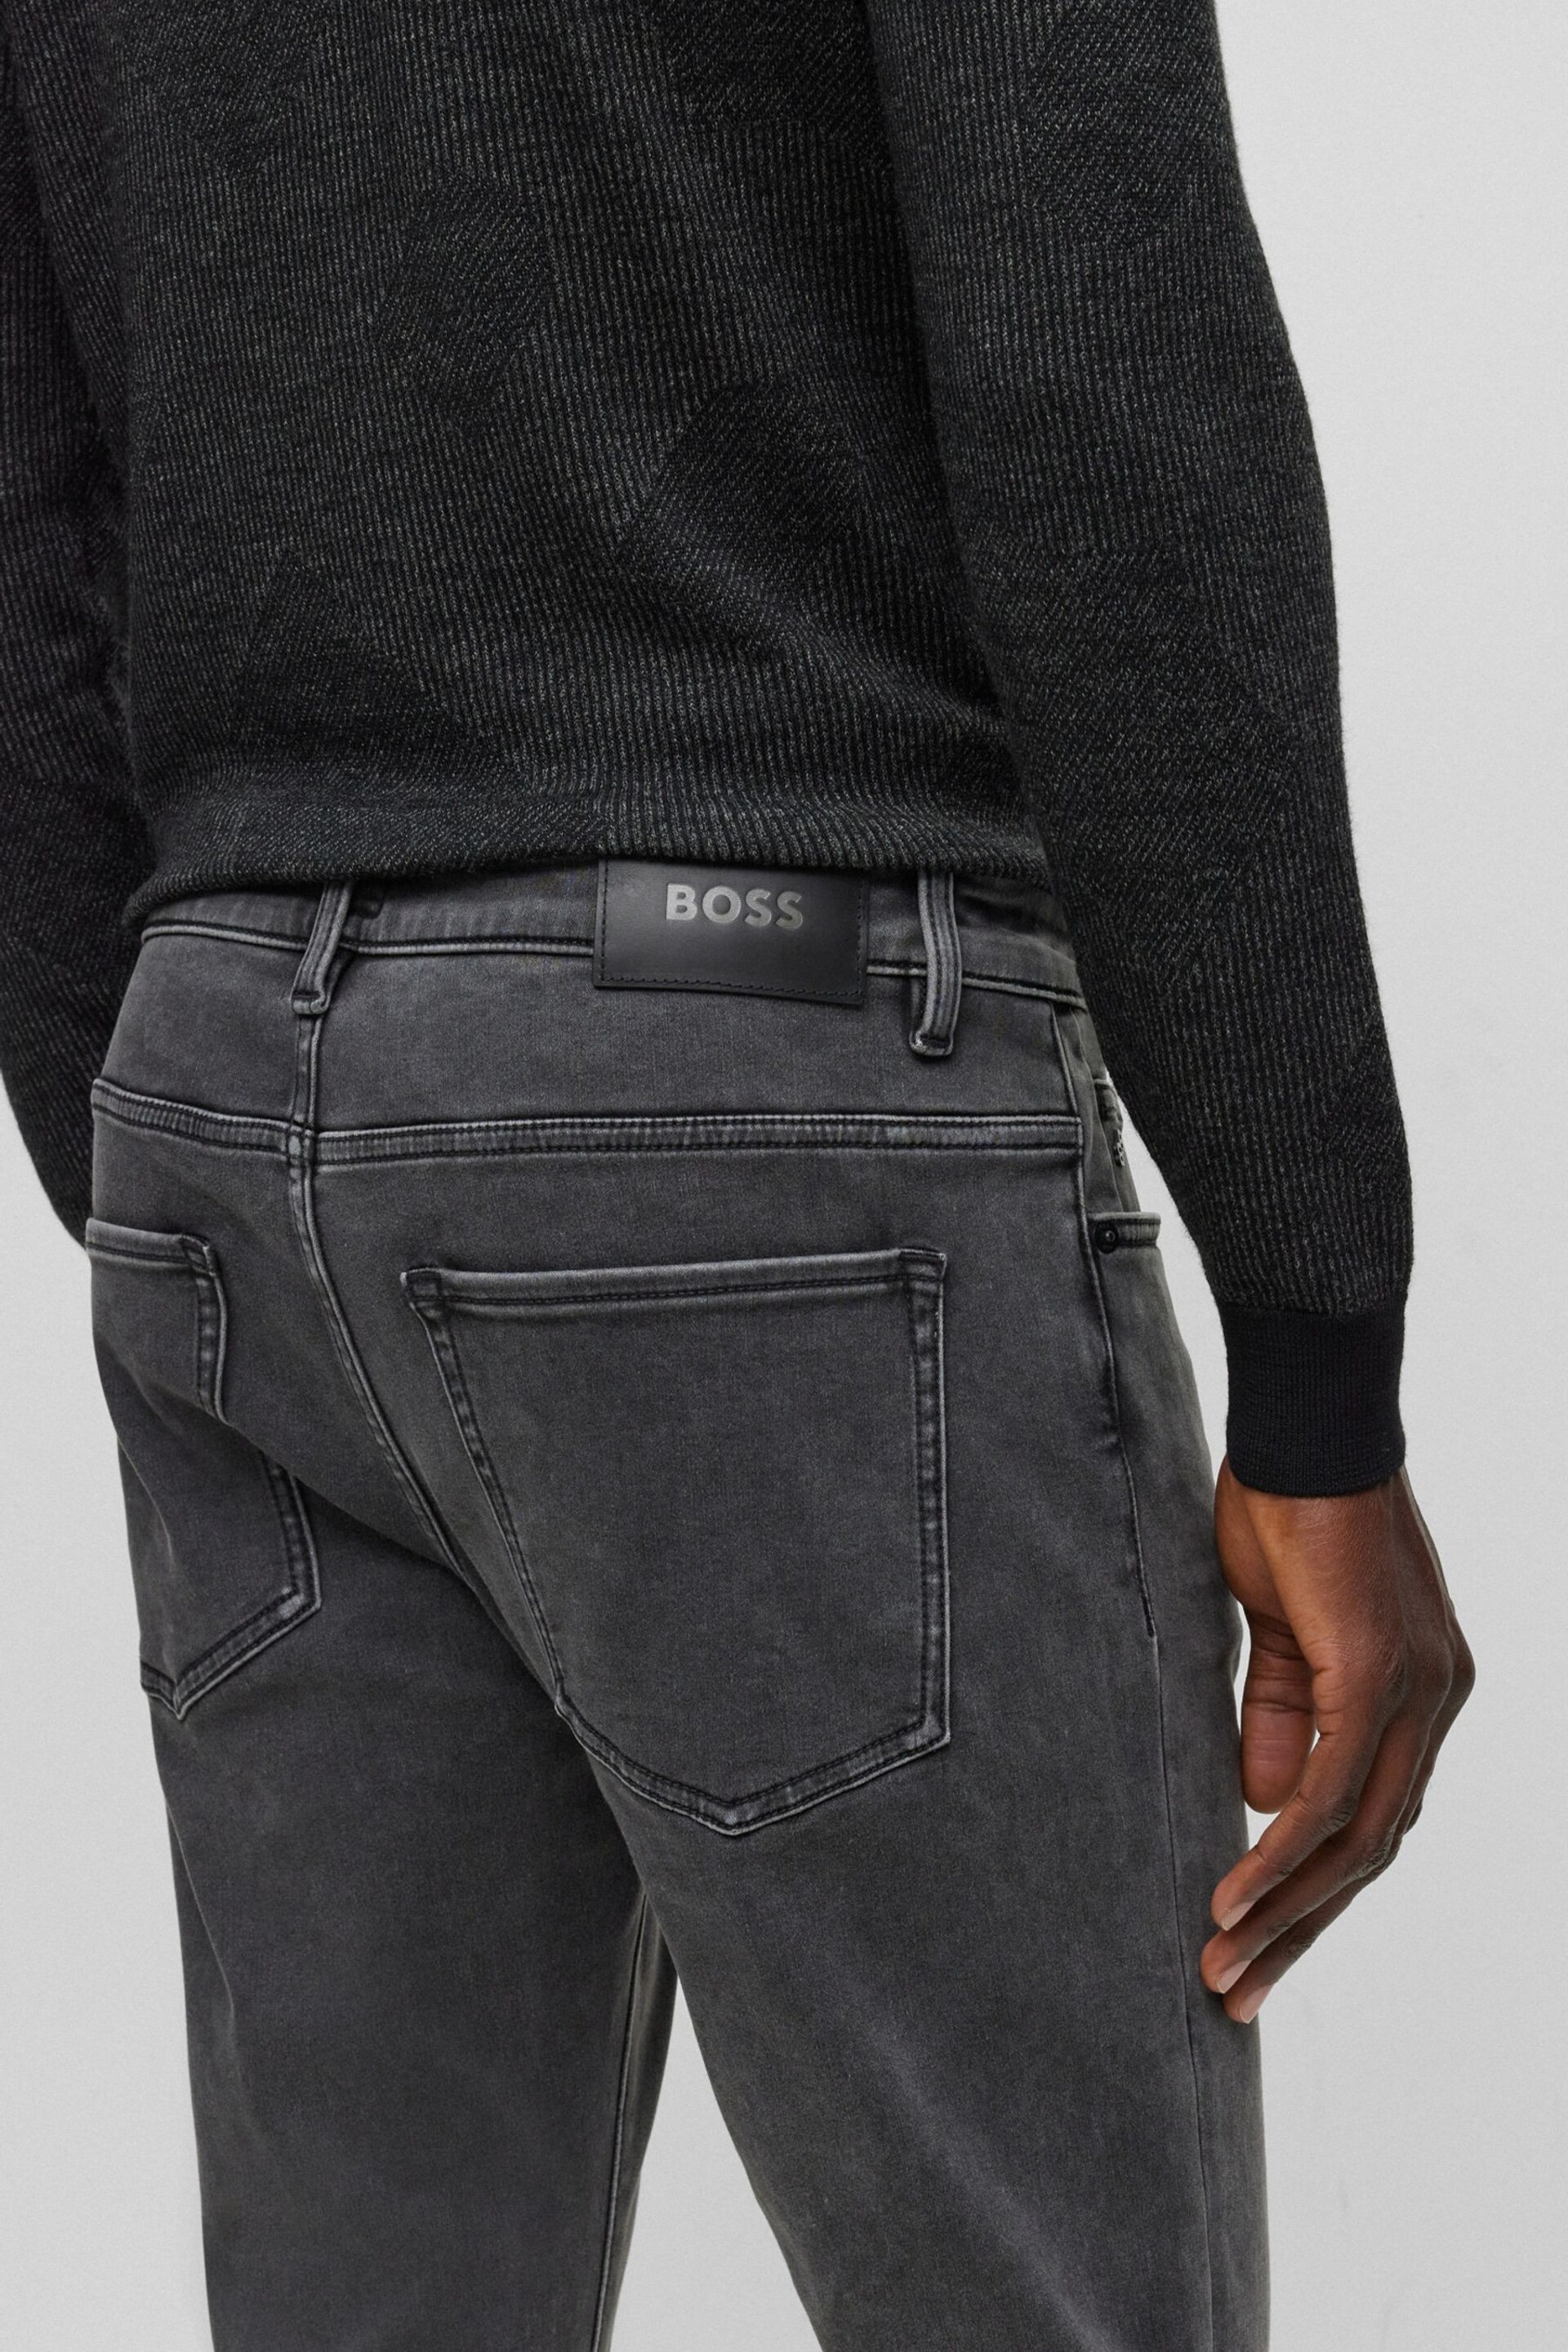 BOSS Dark Grey Delaware Slim Fit Jeans - Image 4 of 5